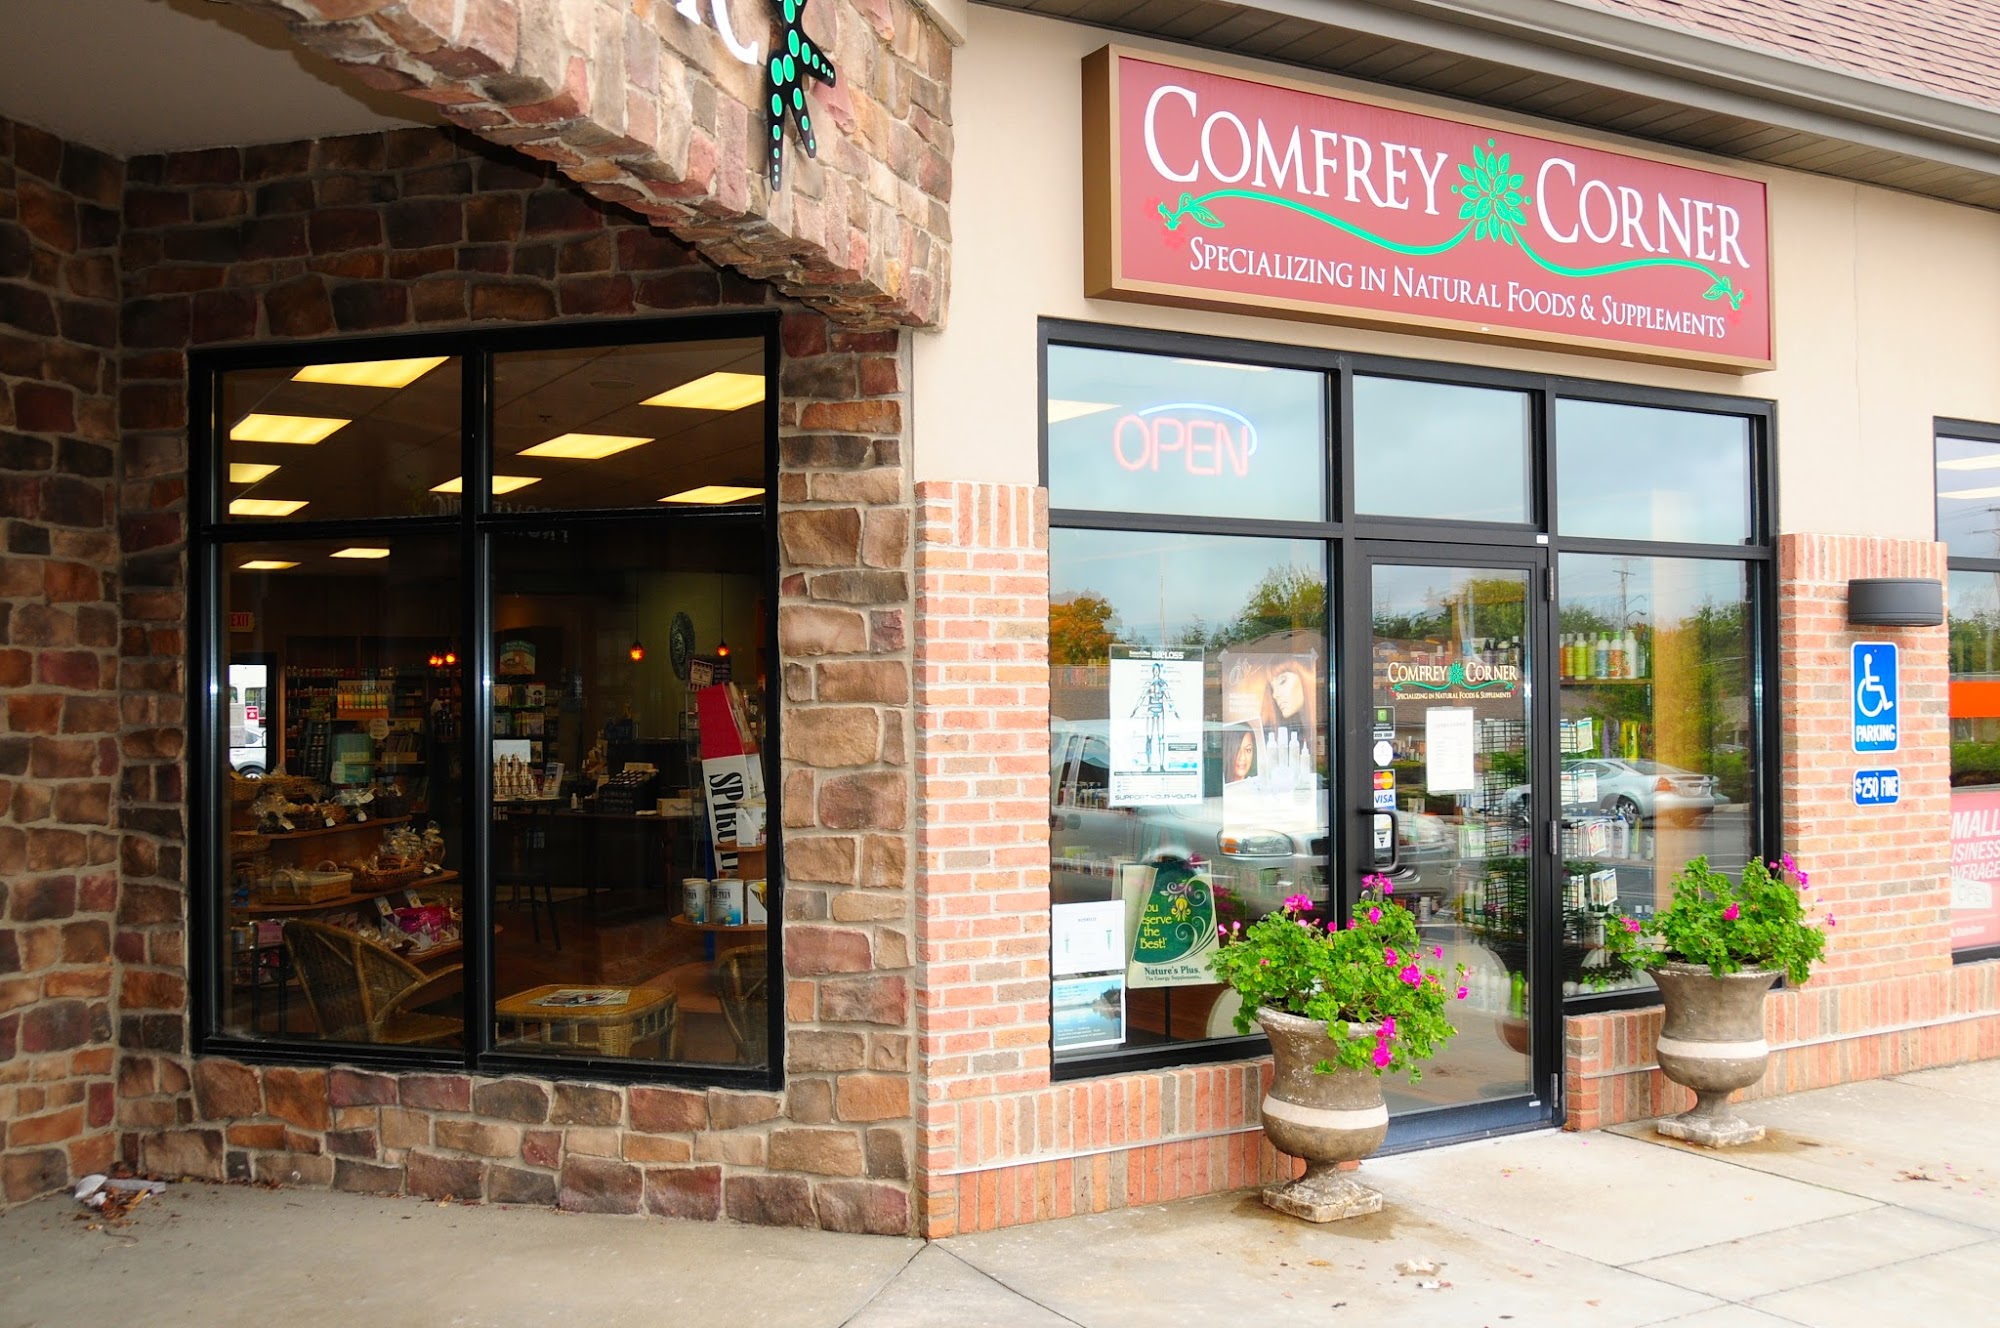 Comfrey Corner Natural Foods